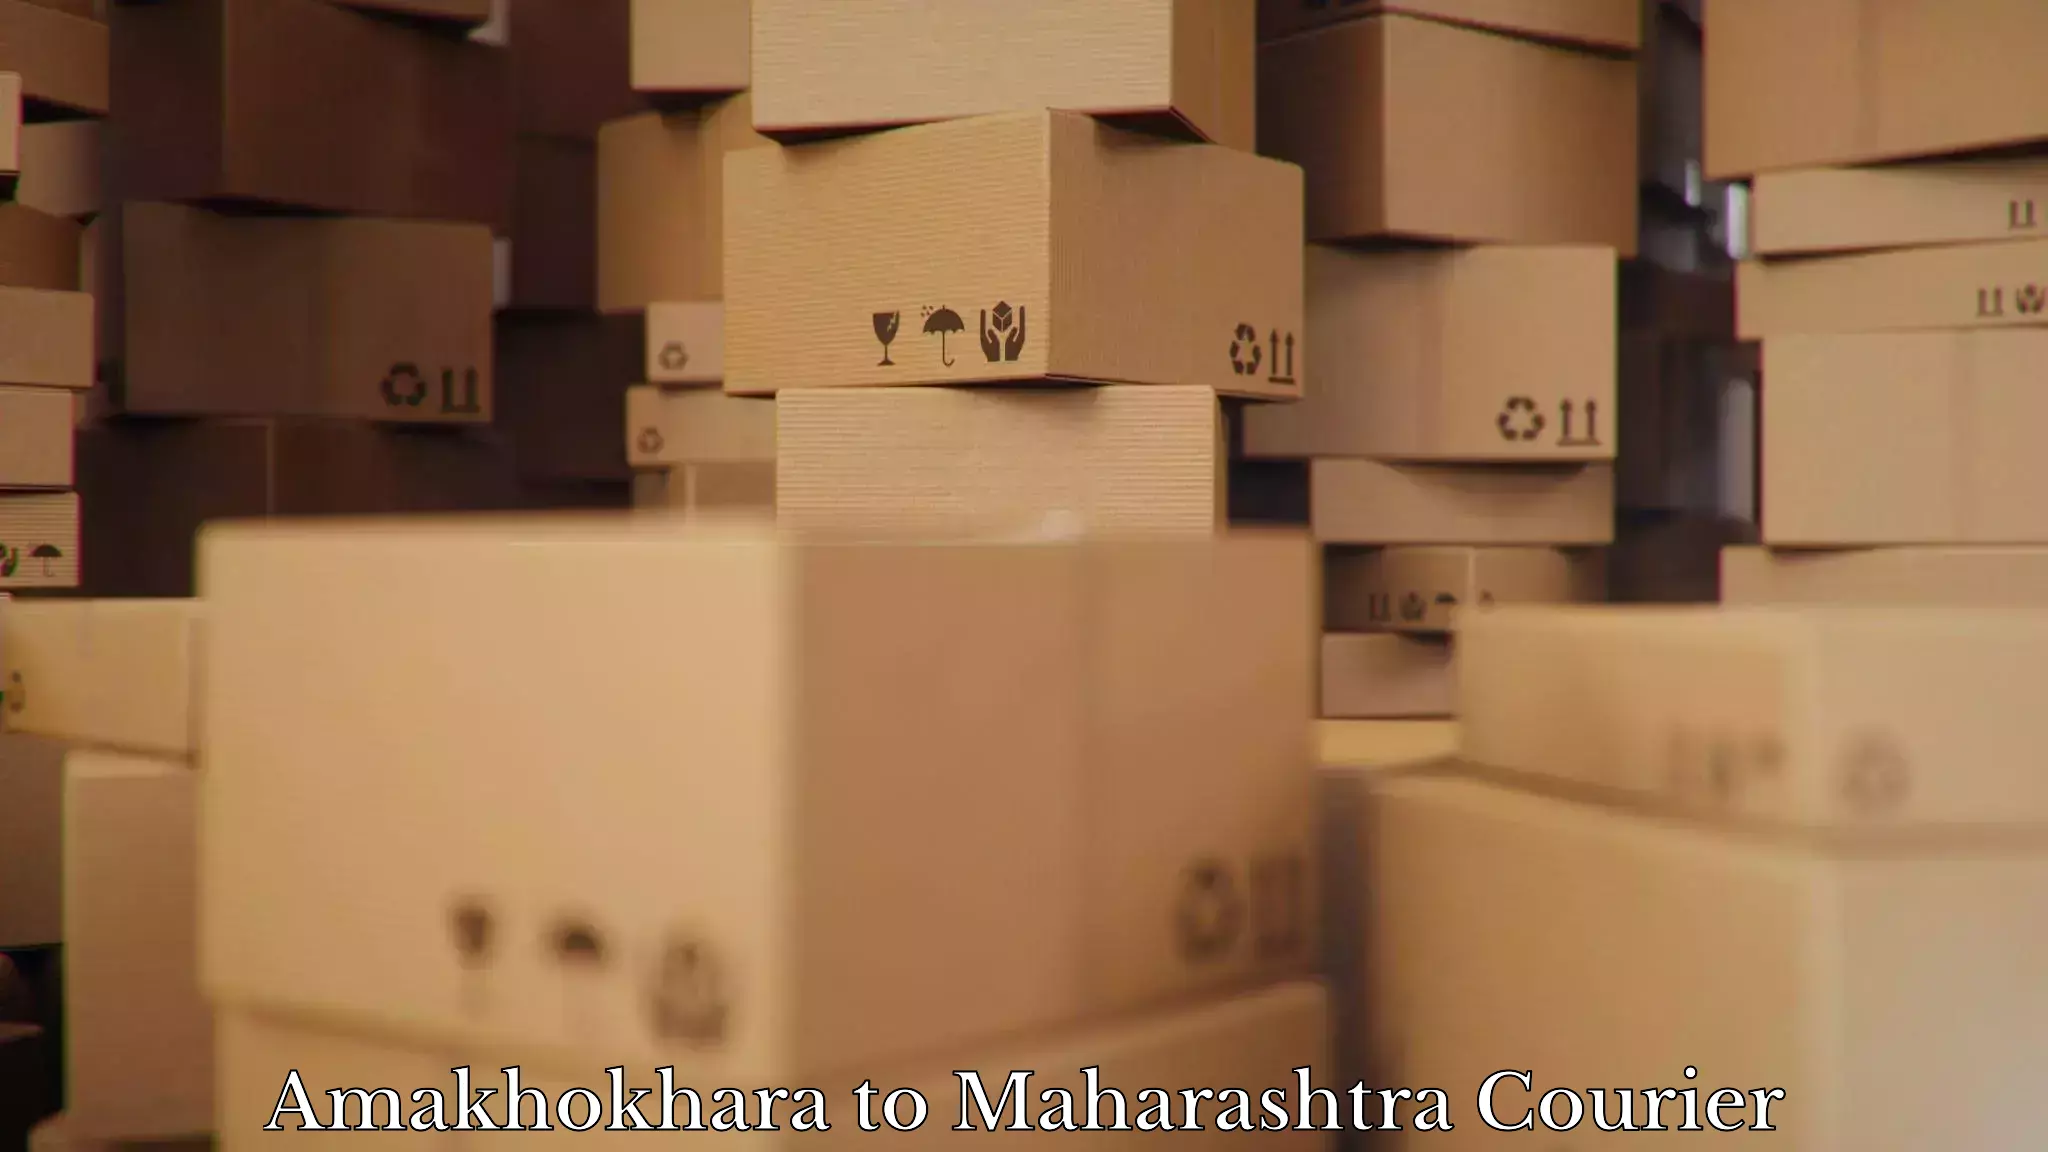 Trusted moving company Amakhokhara to Maharashtra